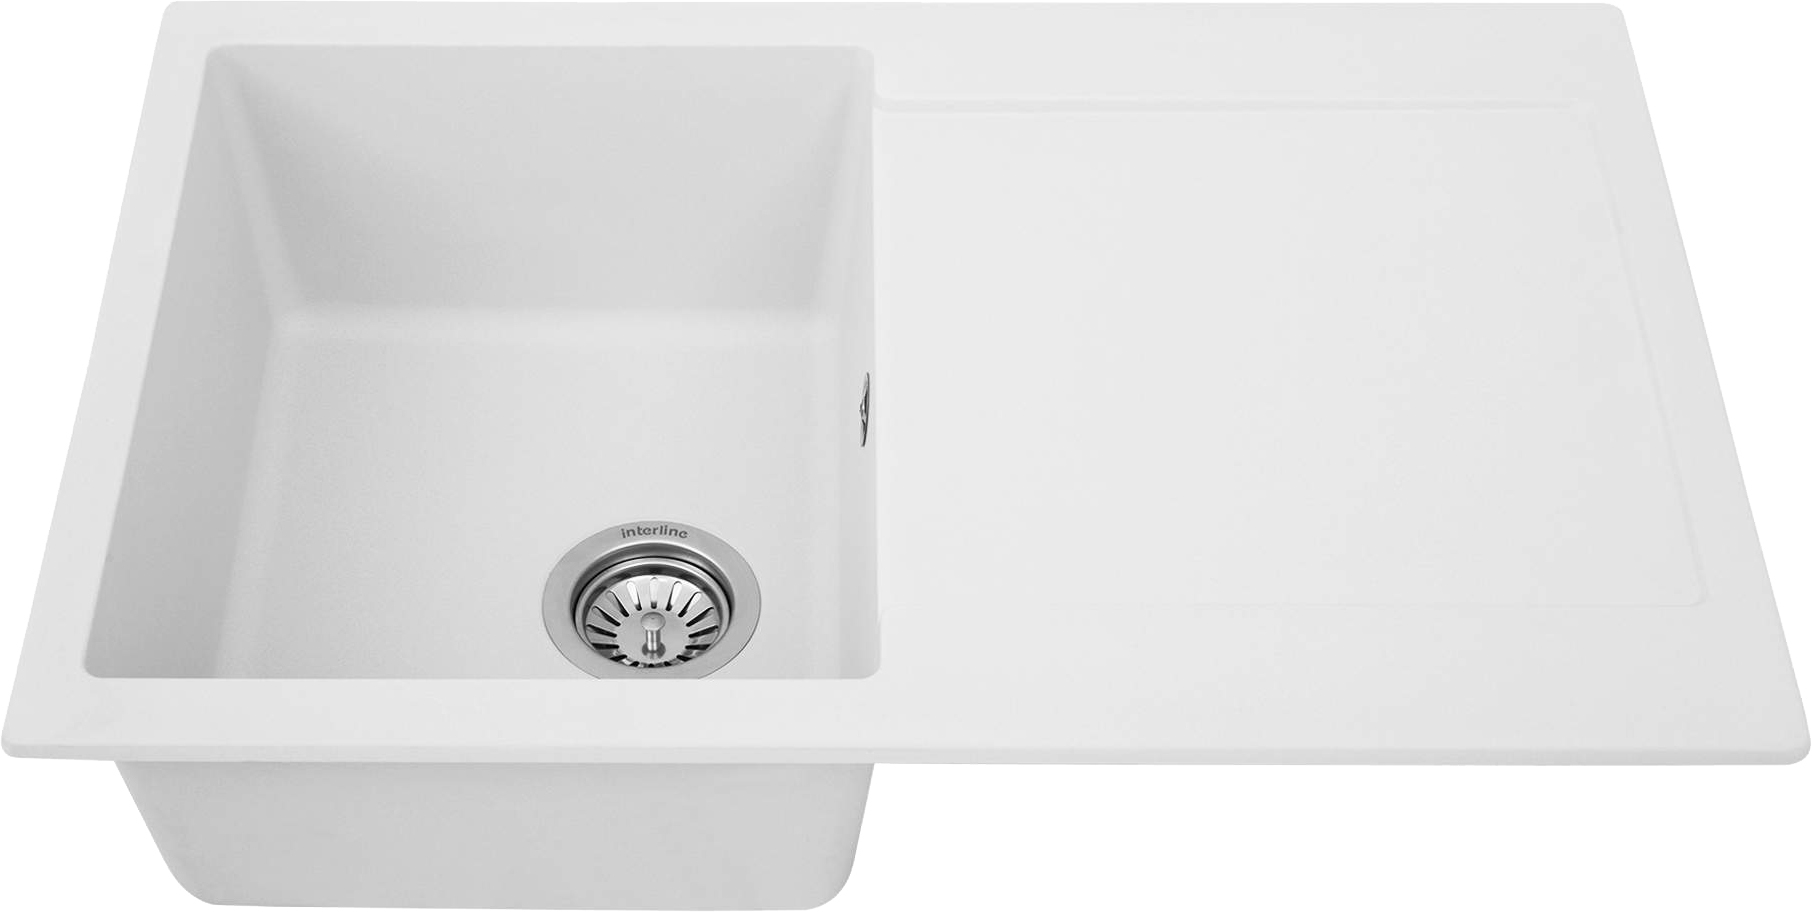 Кухонна мийка Interline Vega White ціна 4799.00 грн - фотографія 2